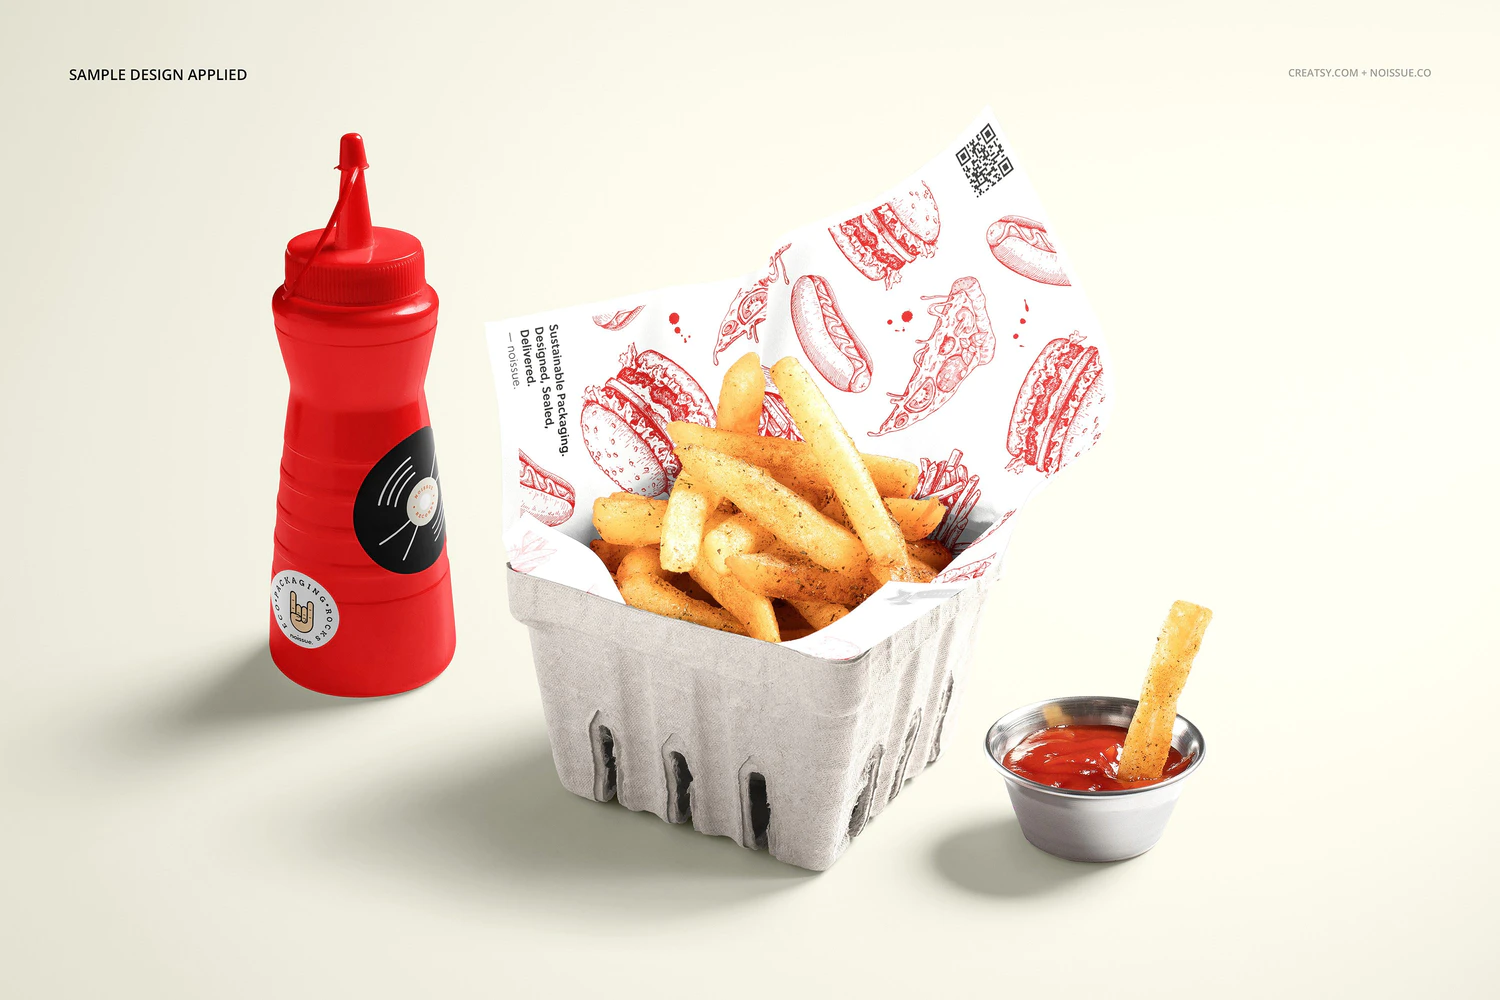 4263 炸薯条食品安全包装纸设计展示样机PSD模板素材 Food Safe Paper Mockup French Fries@GOOODME.COM